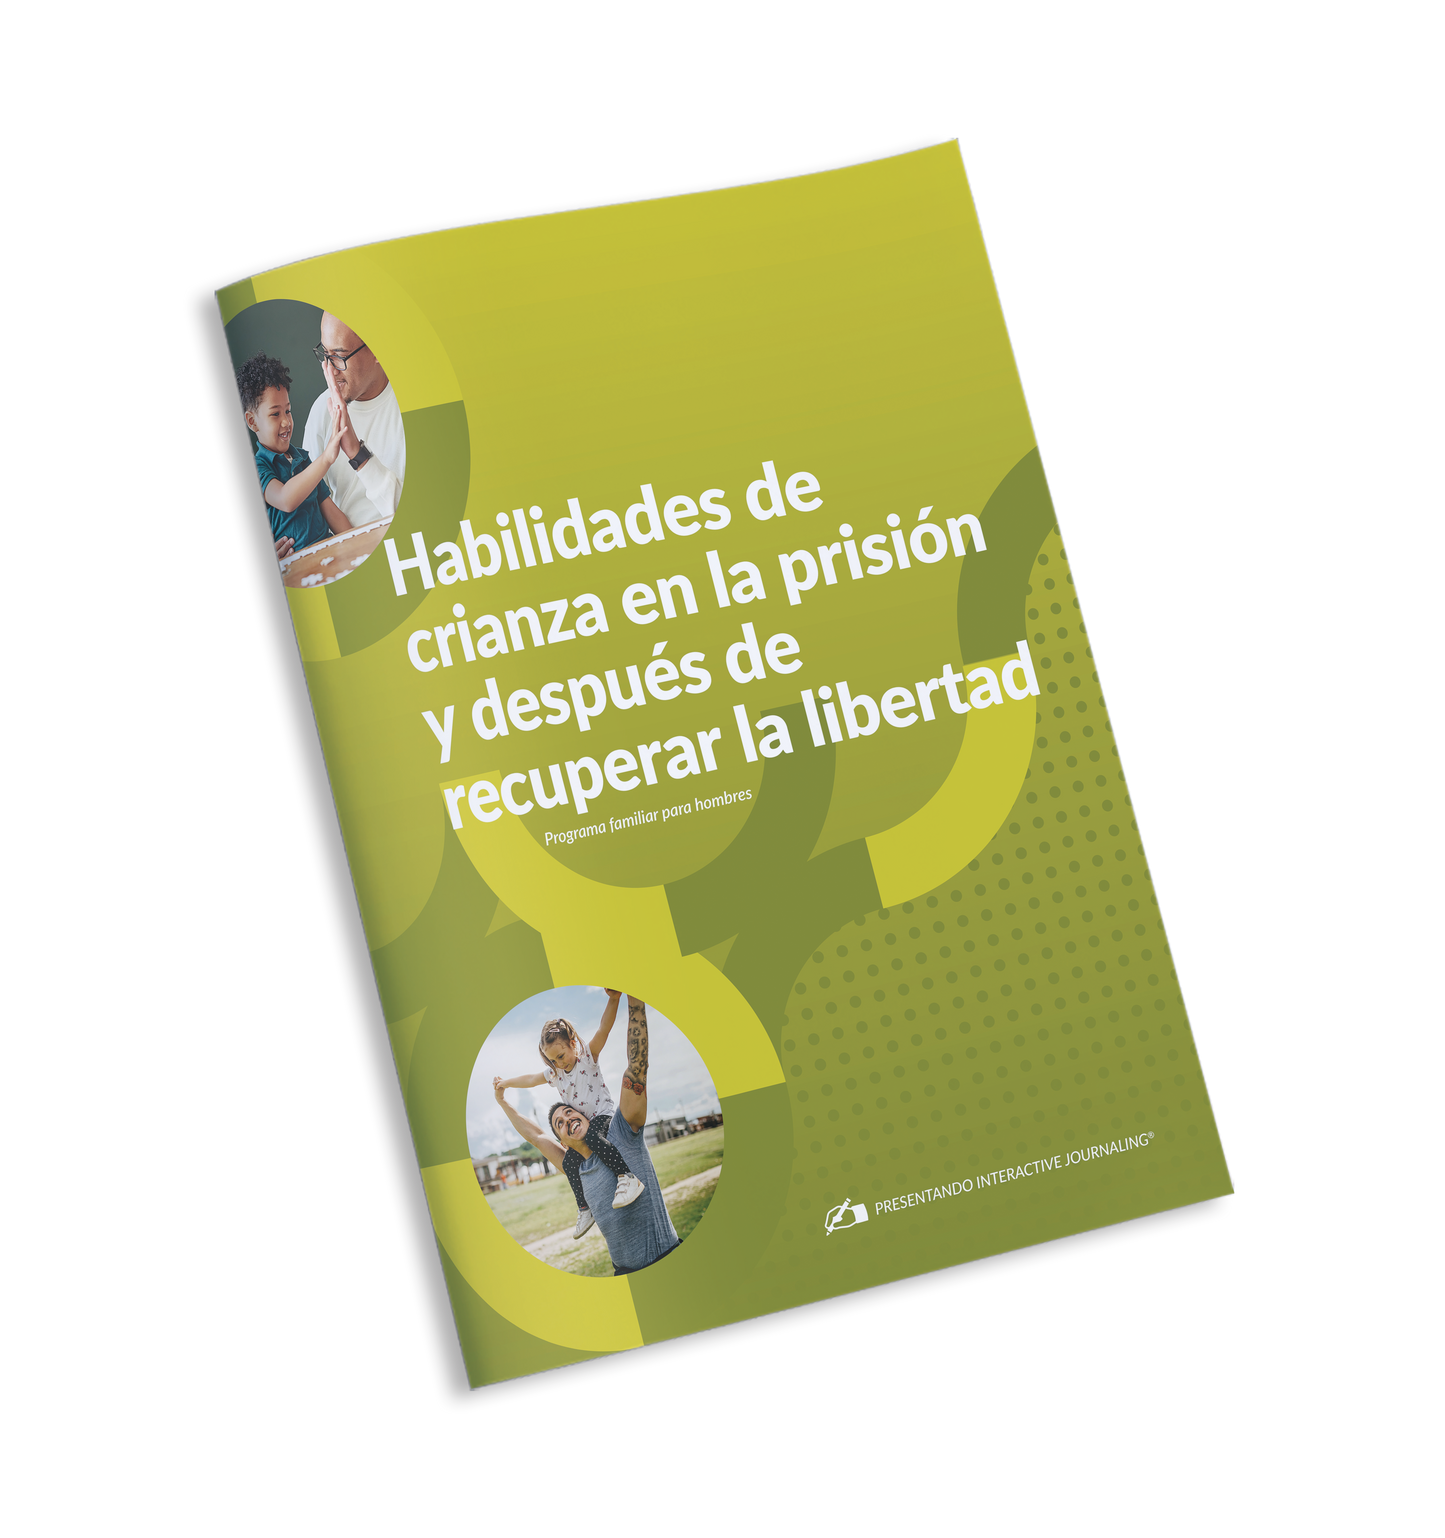 Family Program (Prison-specific) - Men's Parenting Skills in Prison and Beyond Journal - SPANISH